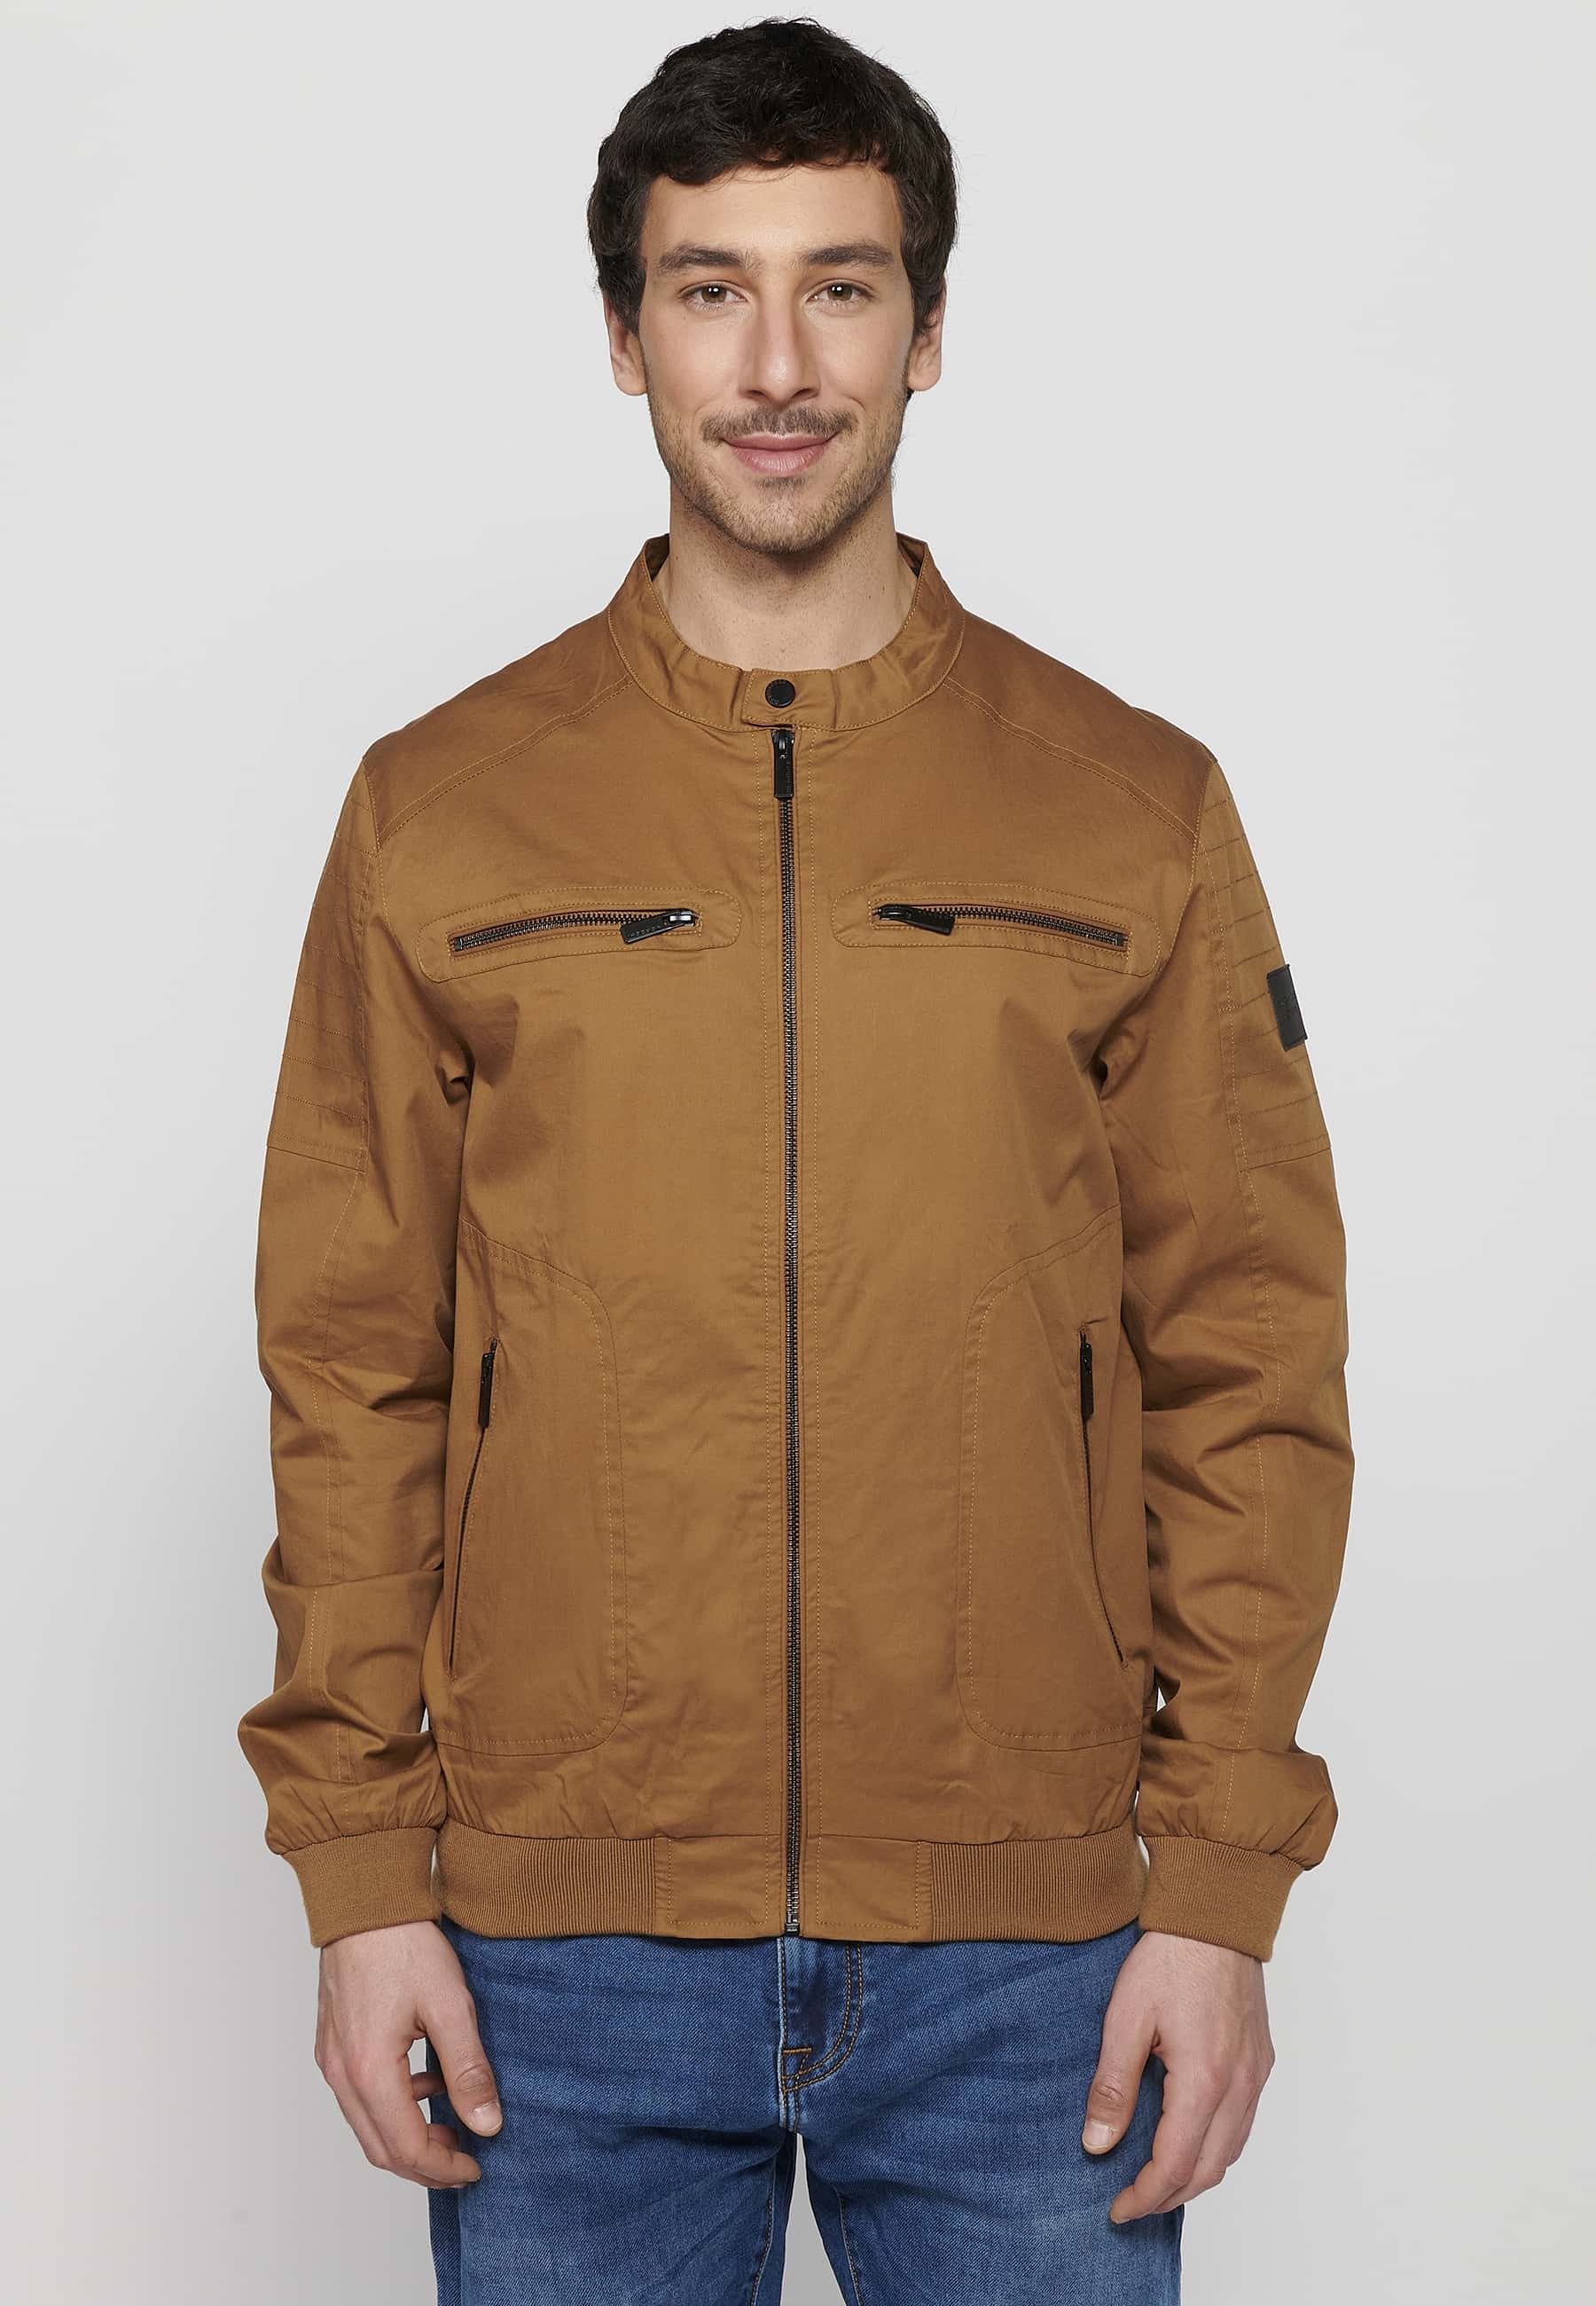 High collar bomber jacket, front zipper closure, brown color for men